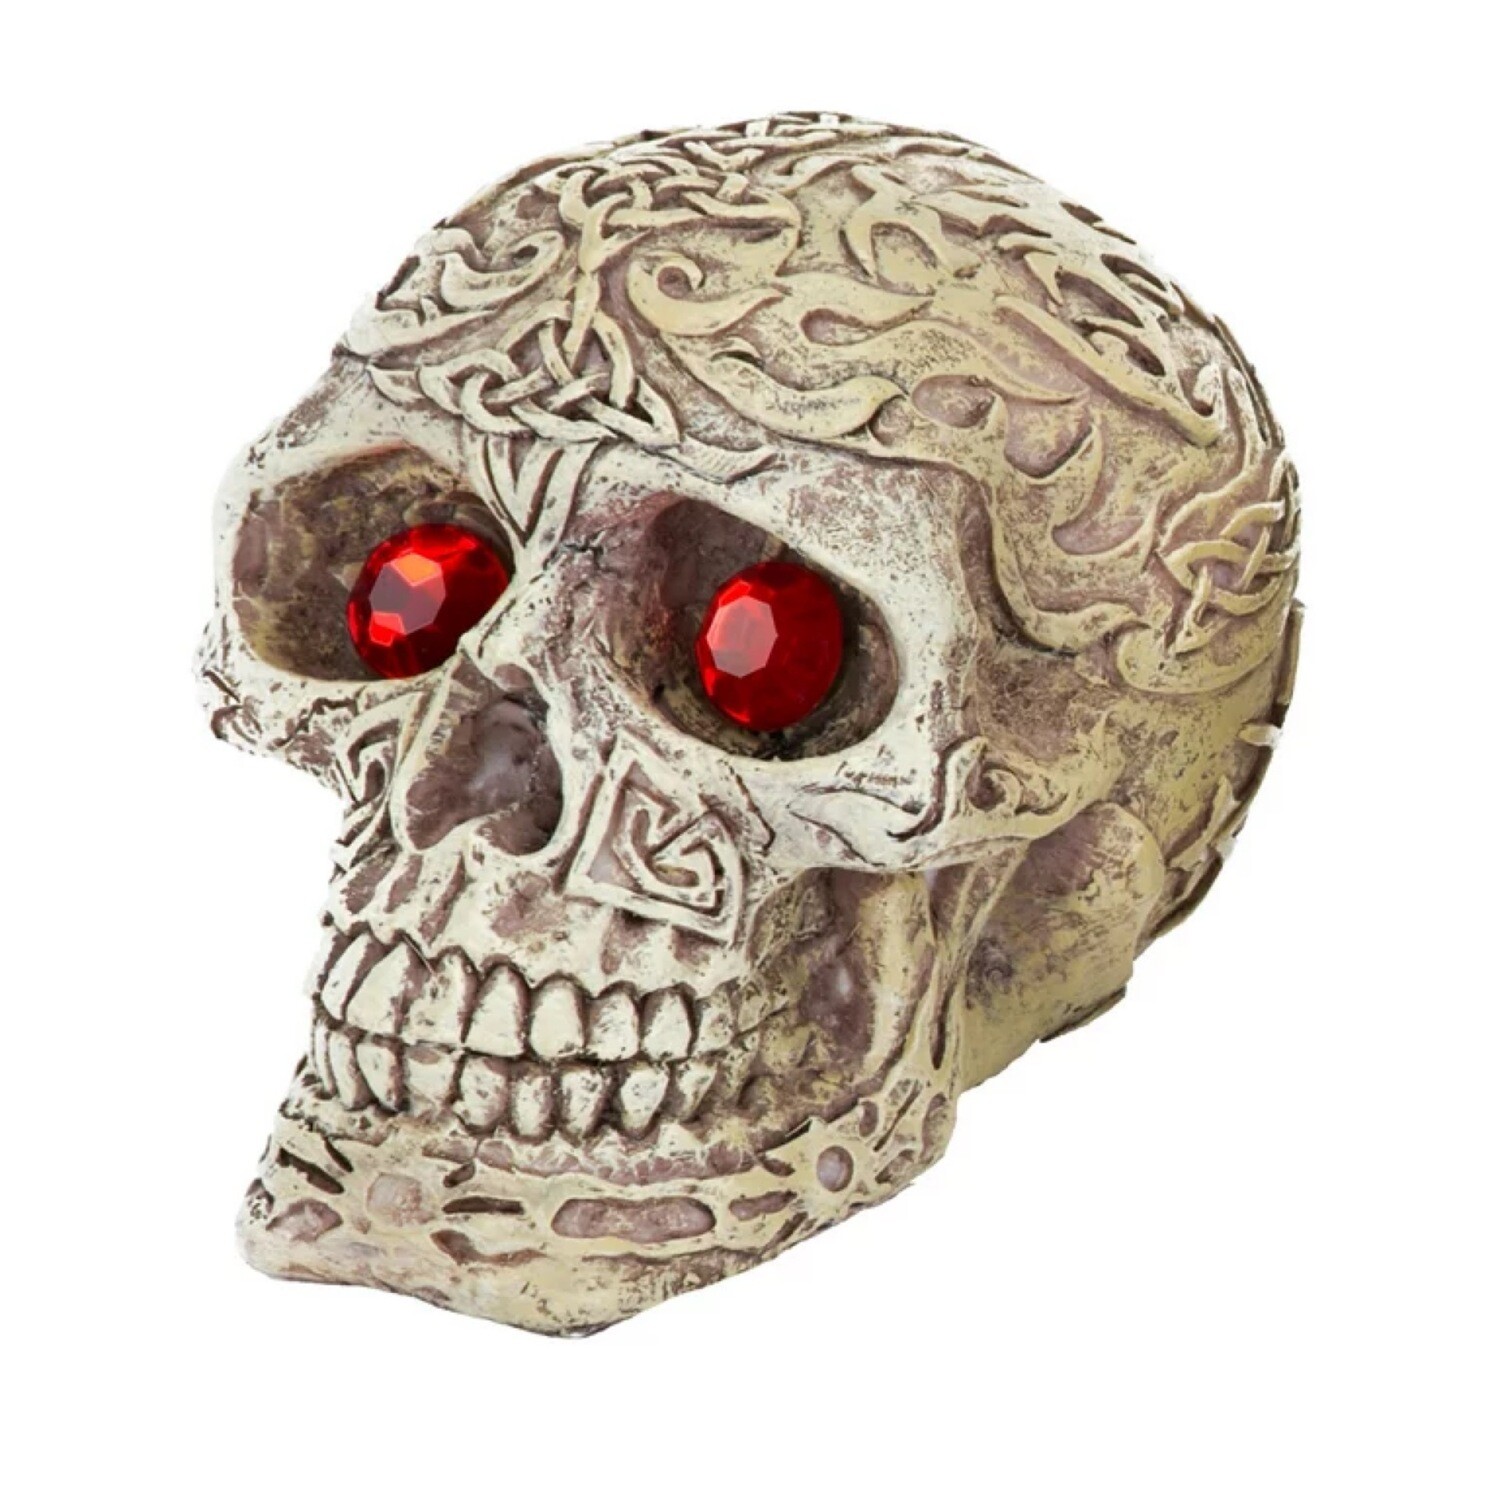 Penn-Plax Deco-Replicas Skull-Gazers Jewel Eyes Aquarium Ornament, Mini